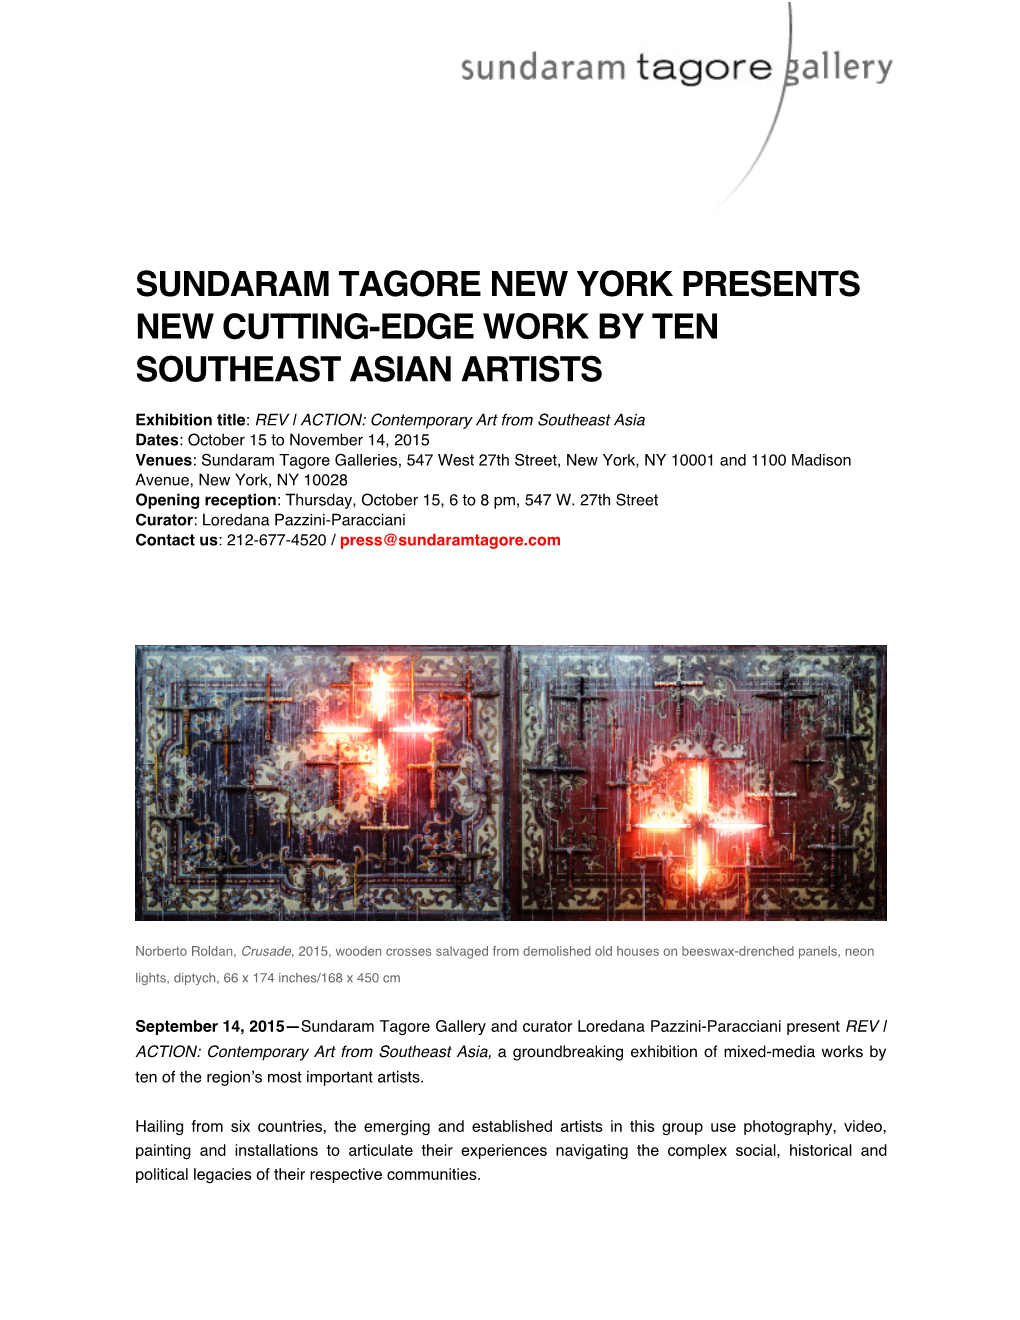 Sundaram Tagore New York Presents New Cutting-Edge Work by Ten Southeast Asian Artists